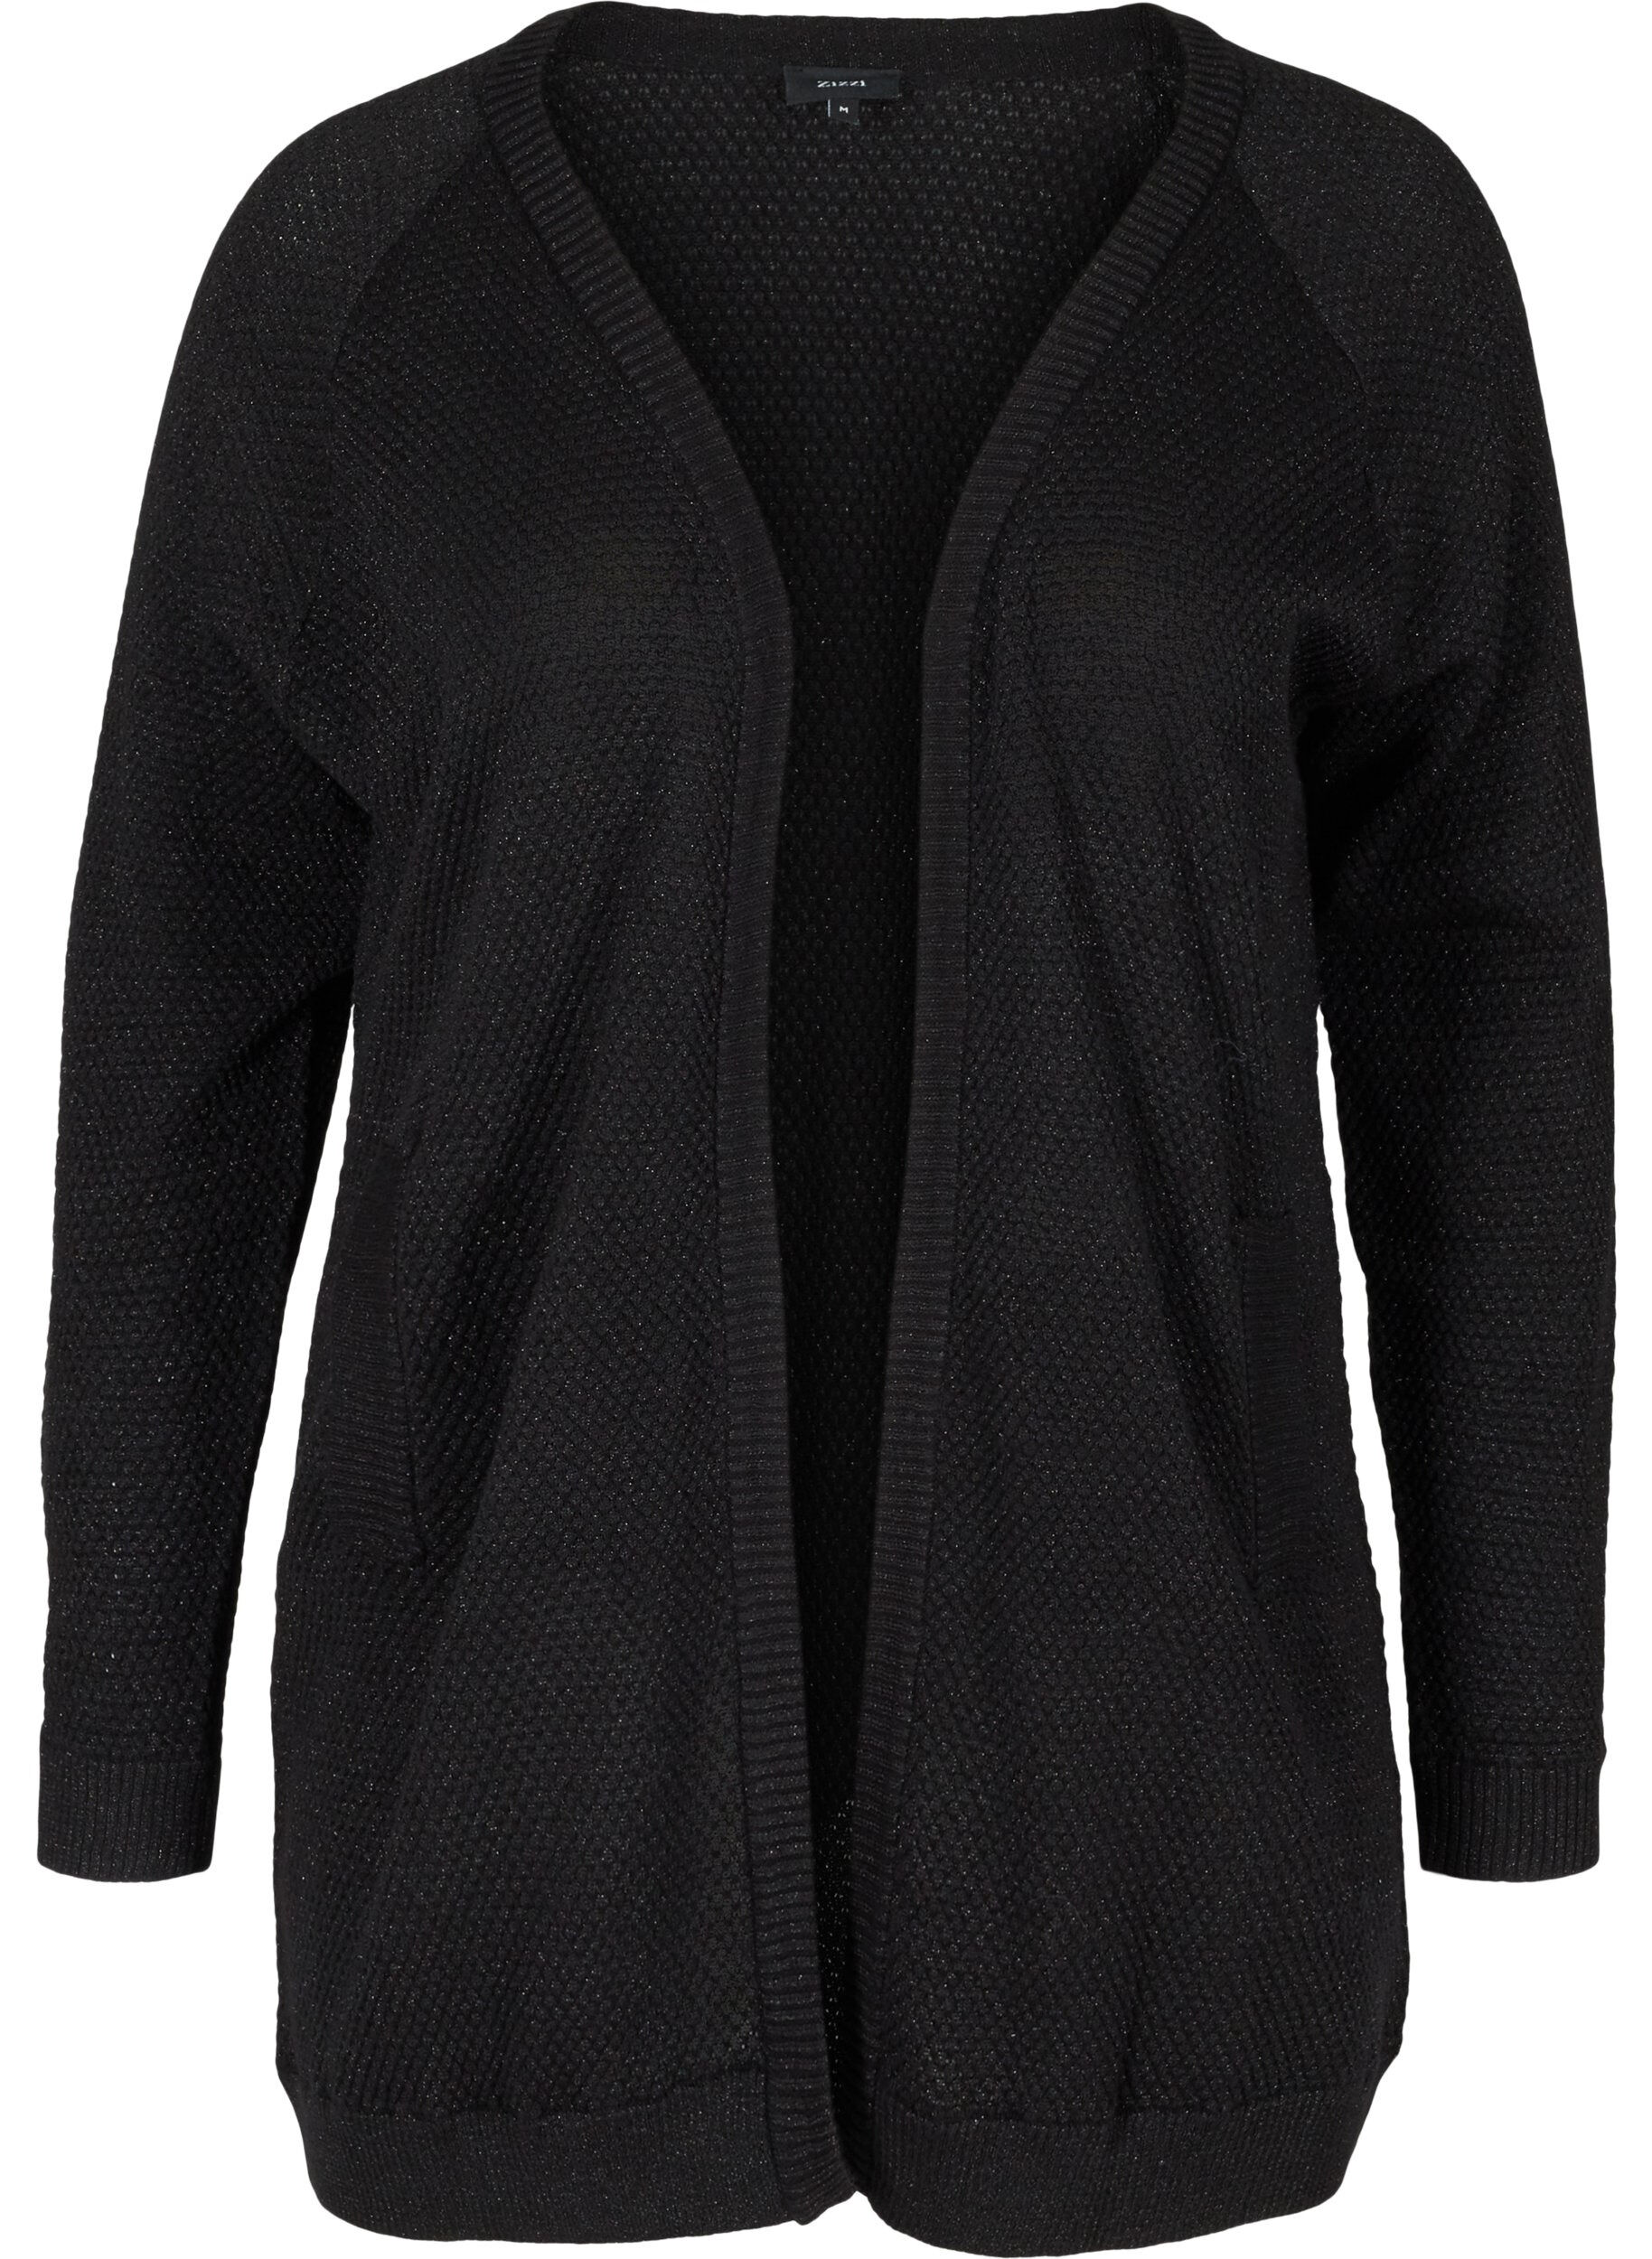 Marina Sport Gebreide jas zwart-wit casual uitstraling Mode Gebreide jassen Gebreide artikelen 